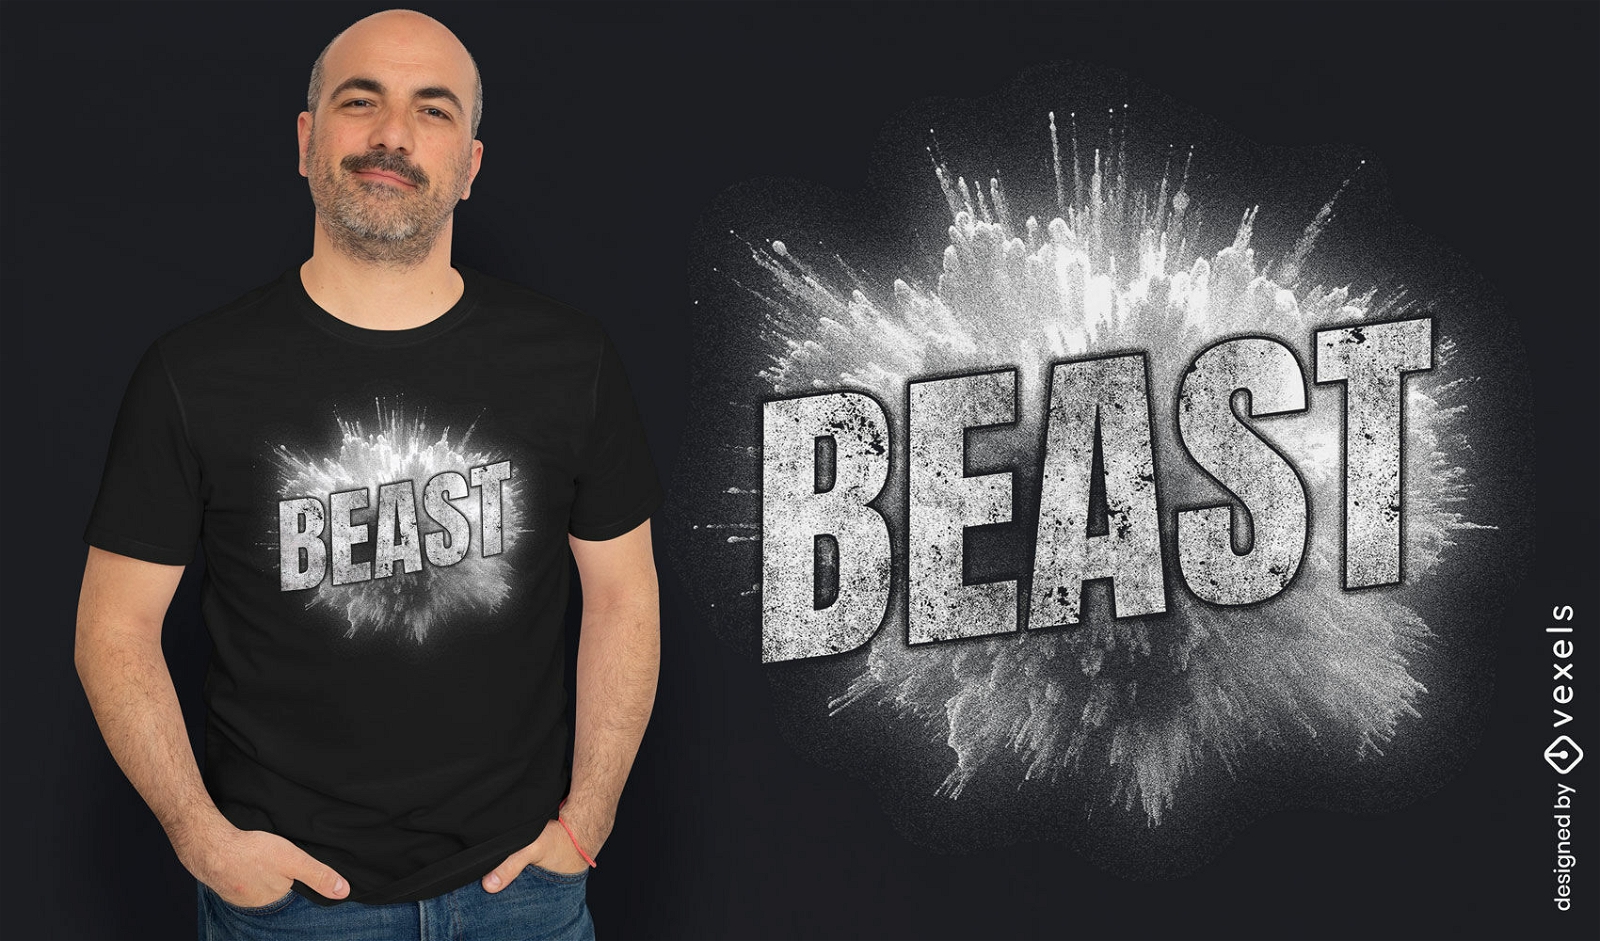 Explosive beast t-shirt design